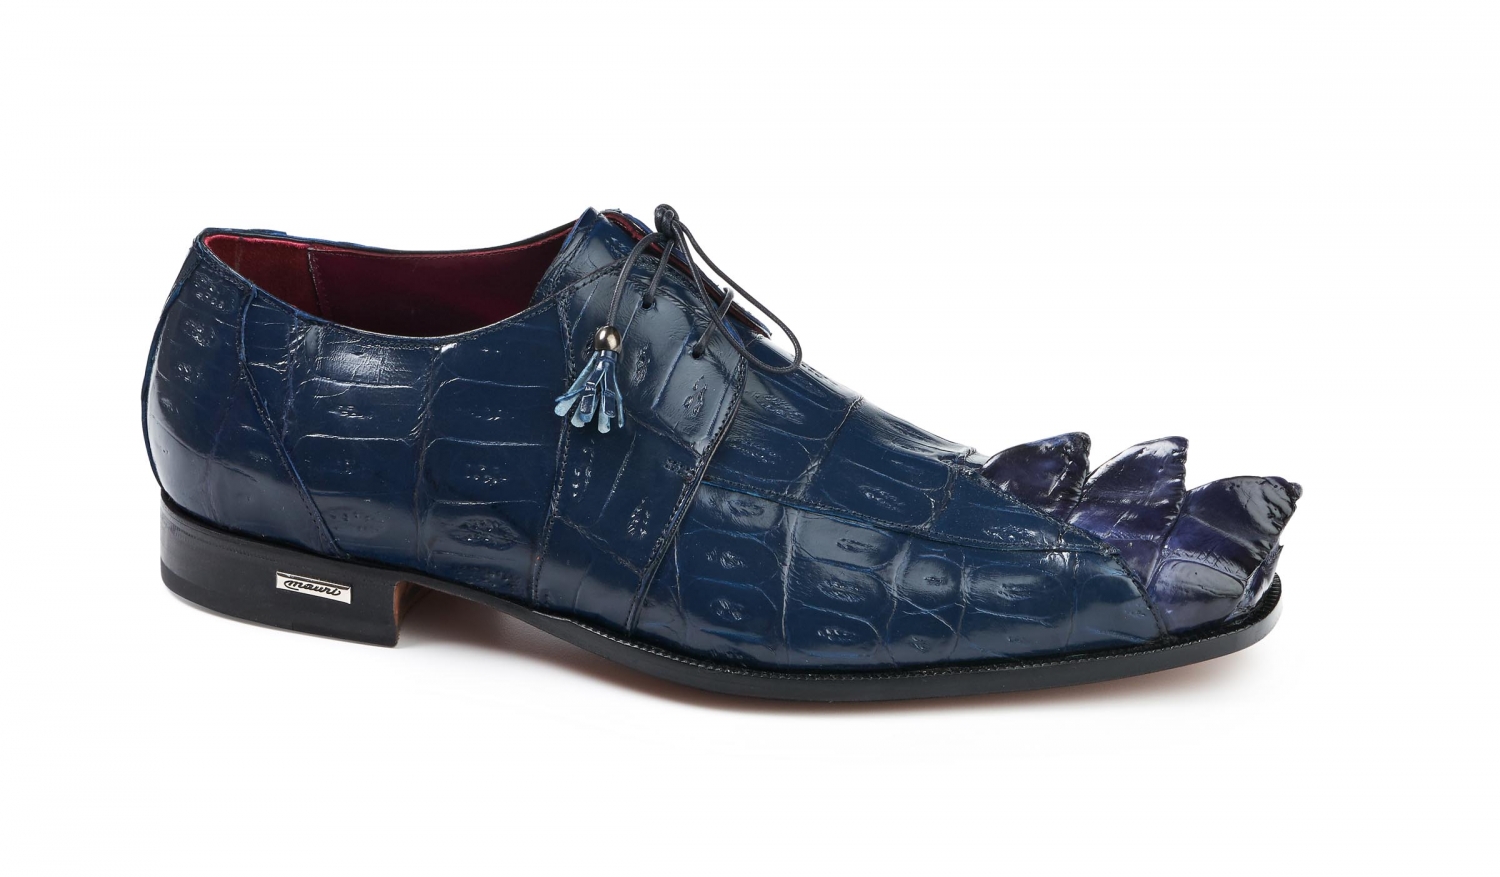 Mauri "Predator" 4910 Wonder Blue Genuine Hornback / Baby Crocodile Dress Shoes